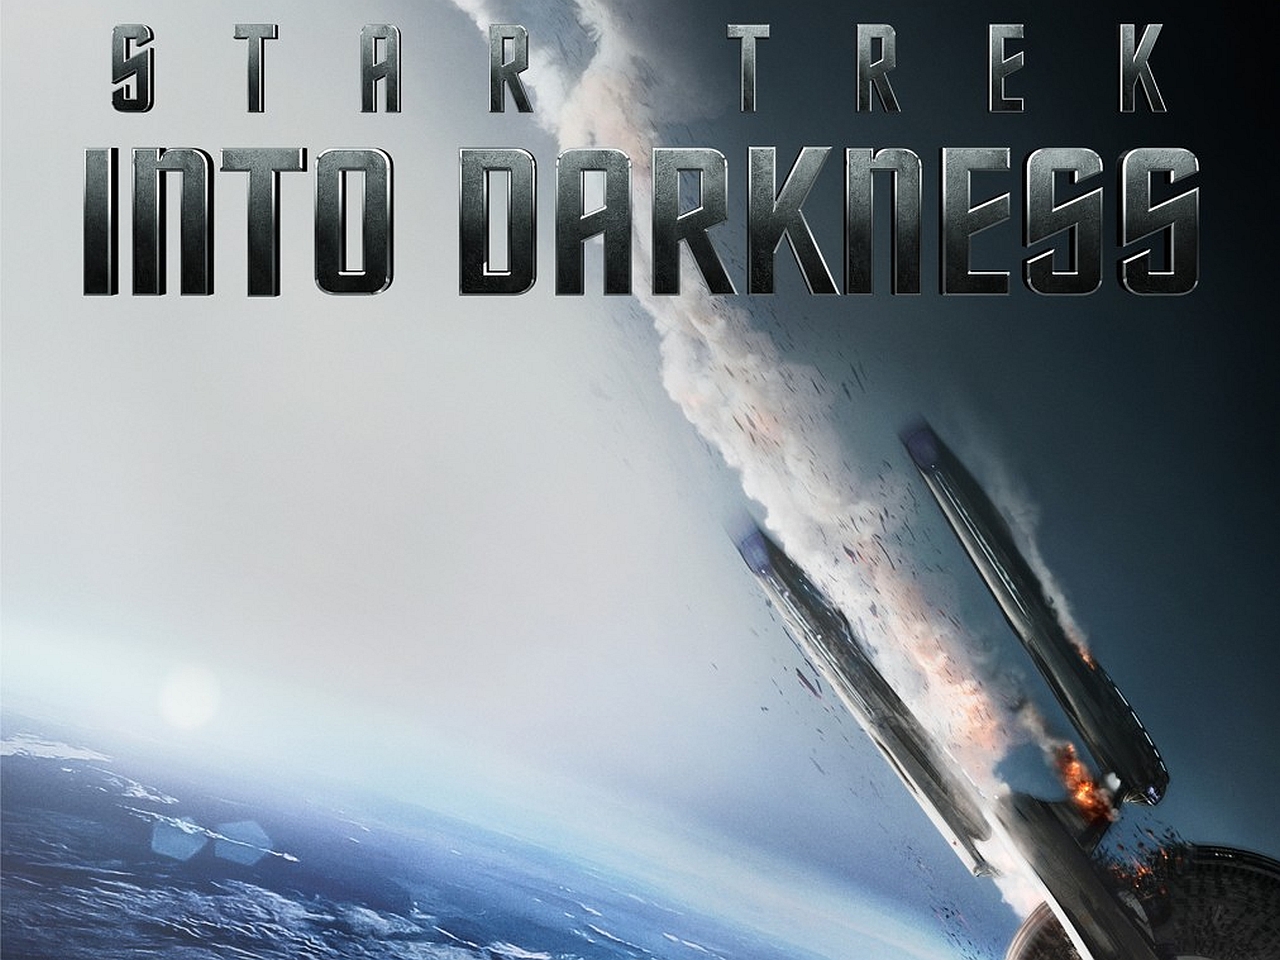 Movie Star Trek Into Darkness Wallpaper:1280x960